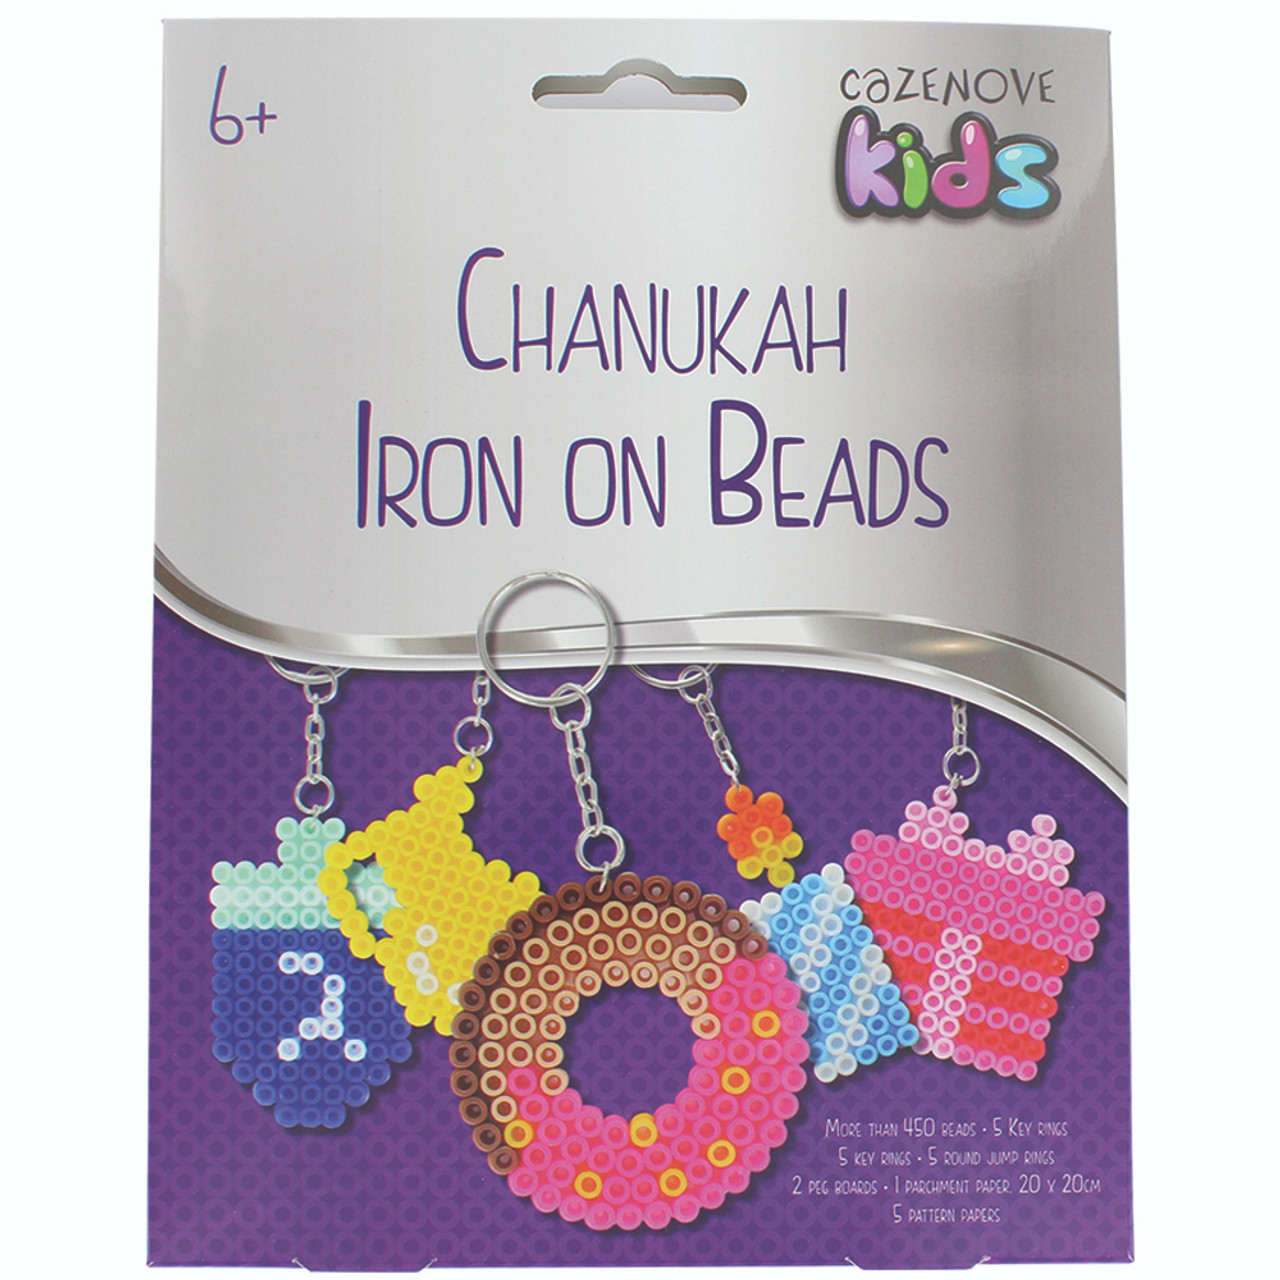 Chanukah Iron on Beads